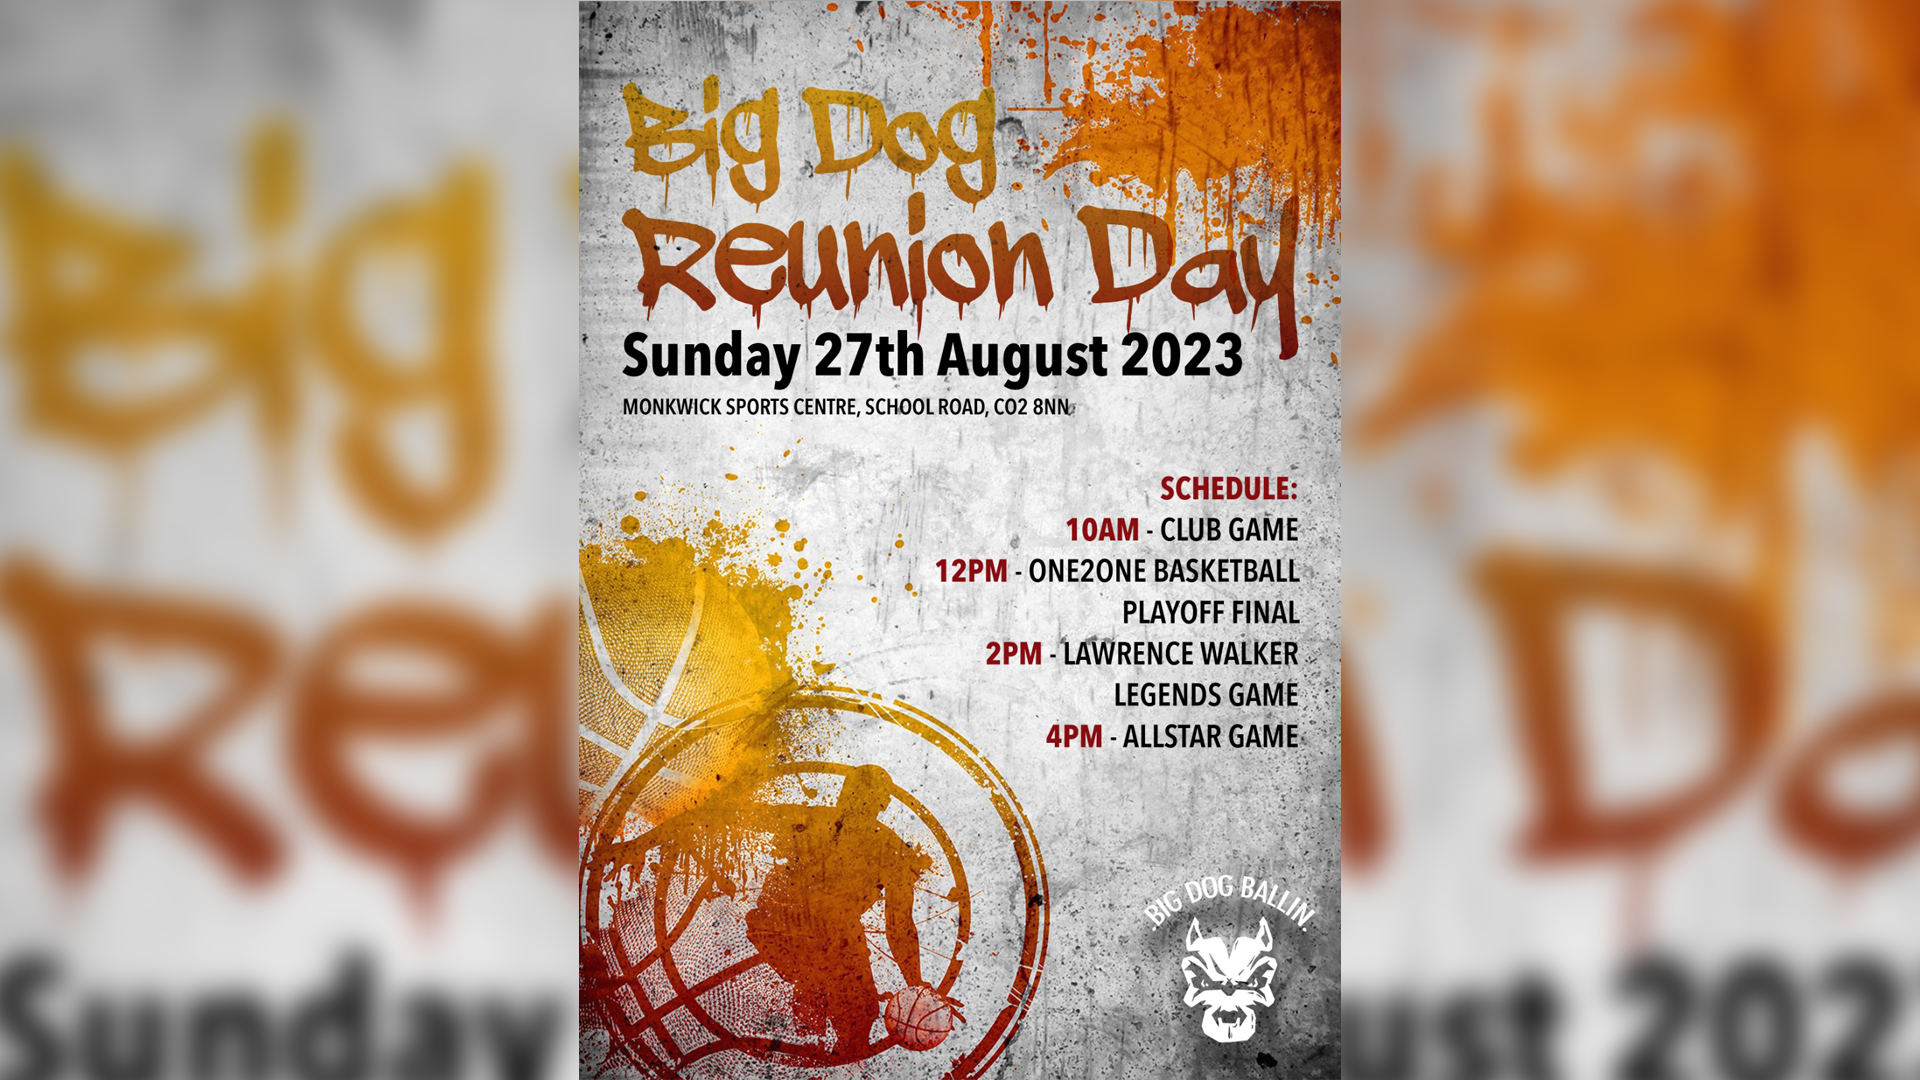 Big Dog Reunion Day 2023